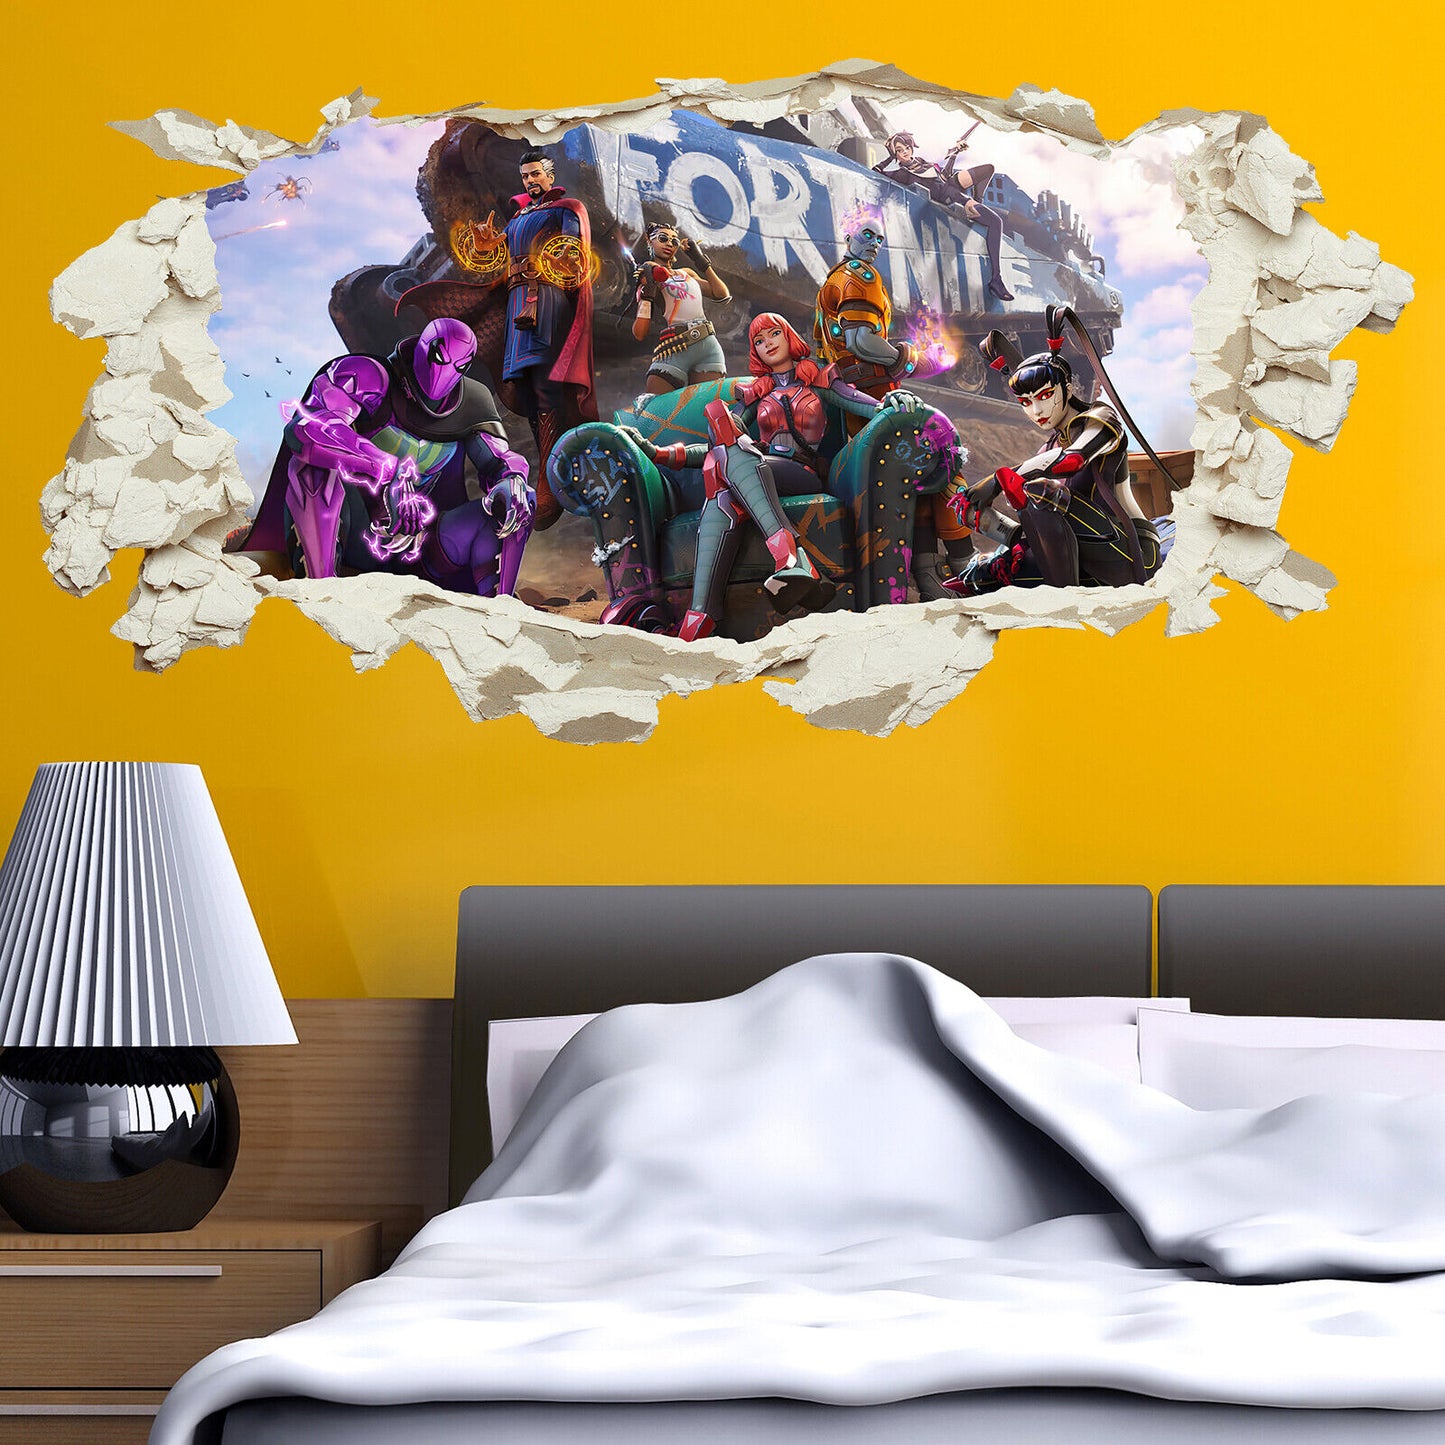 Fortnite Wall Sticker Smashed 3D Crack Kids Bedroom Decal Gift Game season2 120x60cm